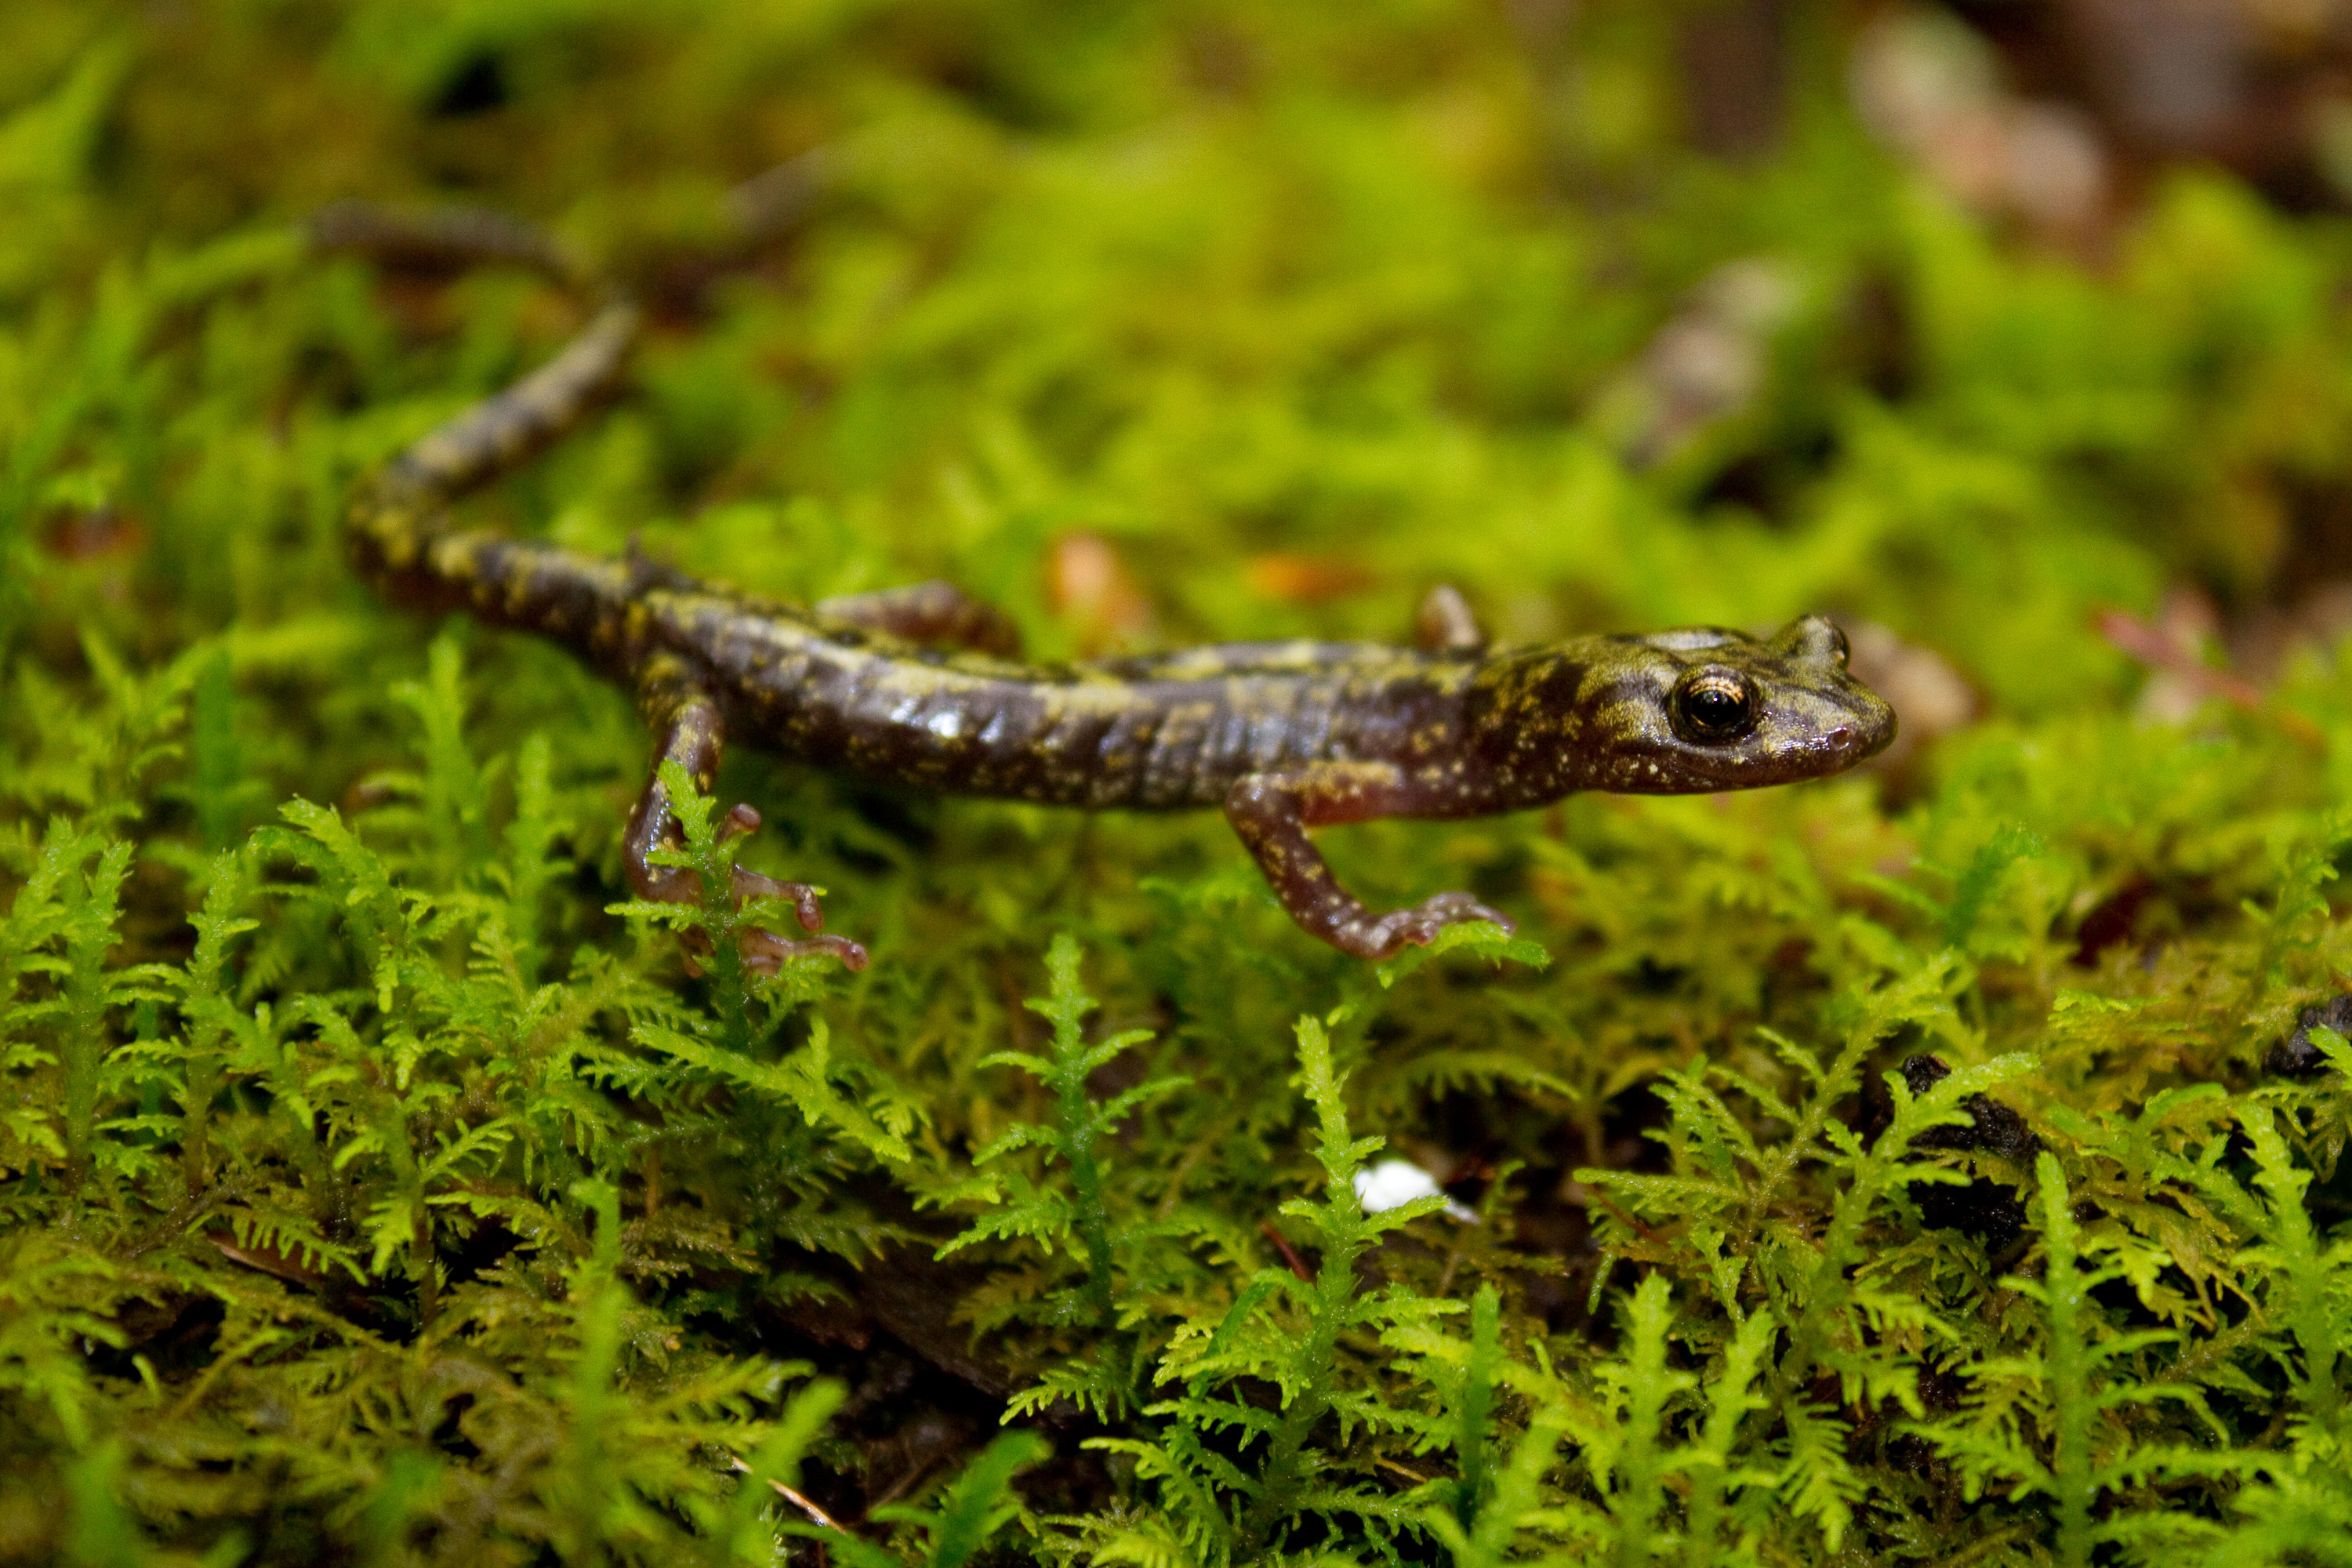 Closeup of a small, brown salamander crawling on a mossy log.